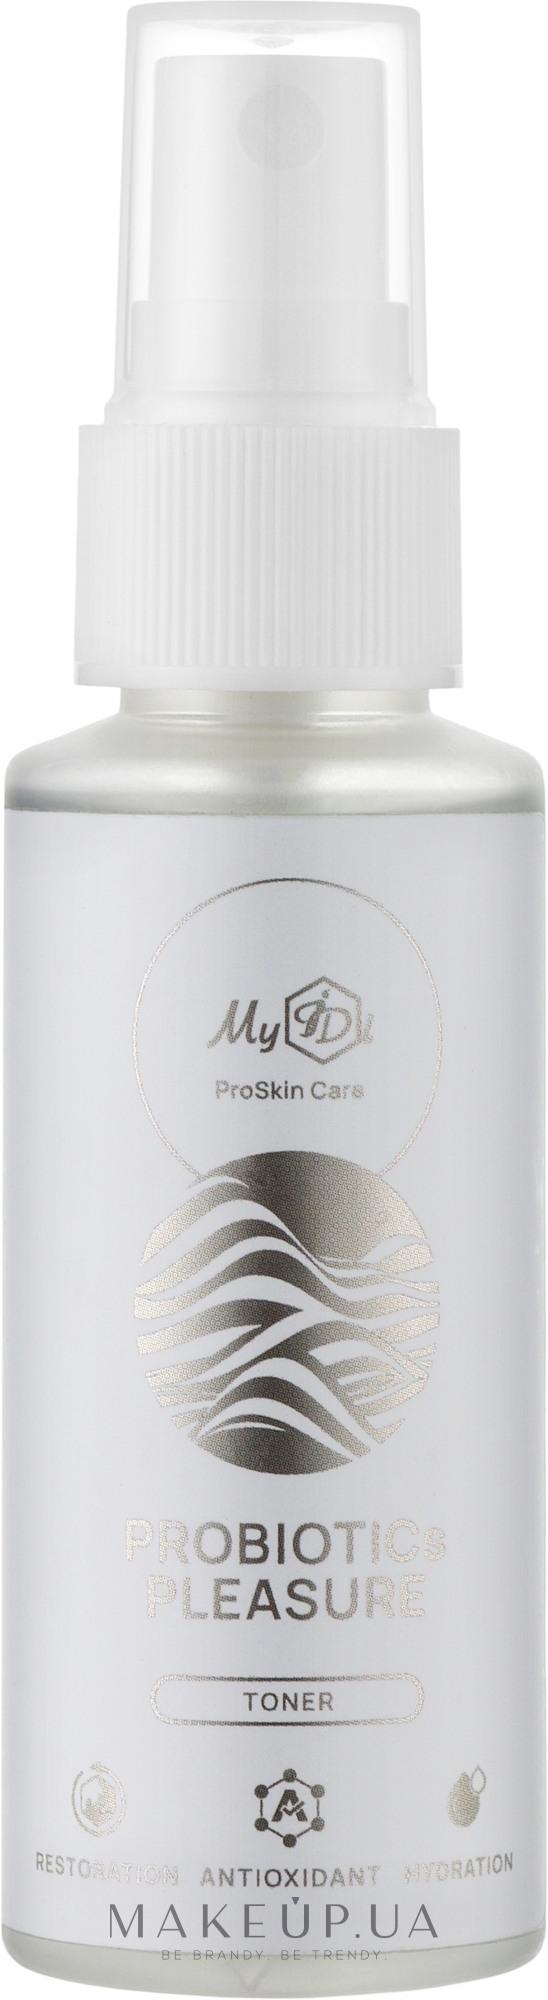 Тонер з пробіотиками - MyIDi Probiotics Pleasure Toner — фото 50ml